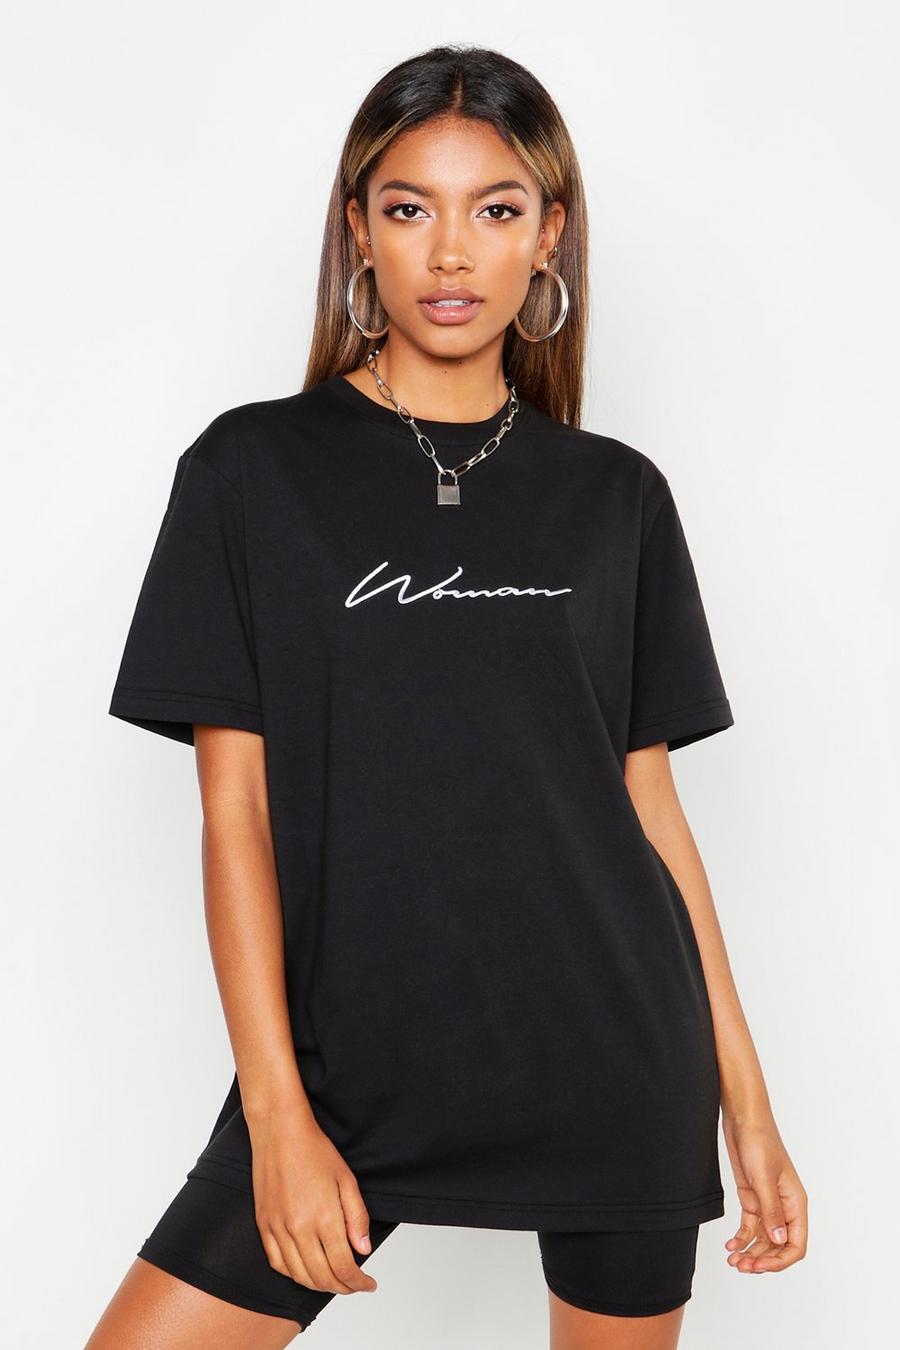 Camiseta con bordado “Woman” image number 1